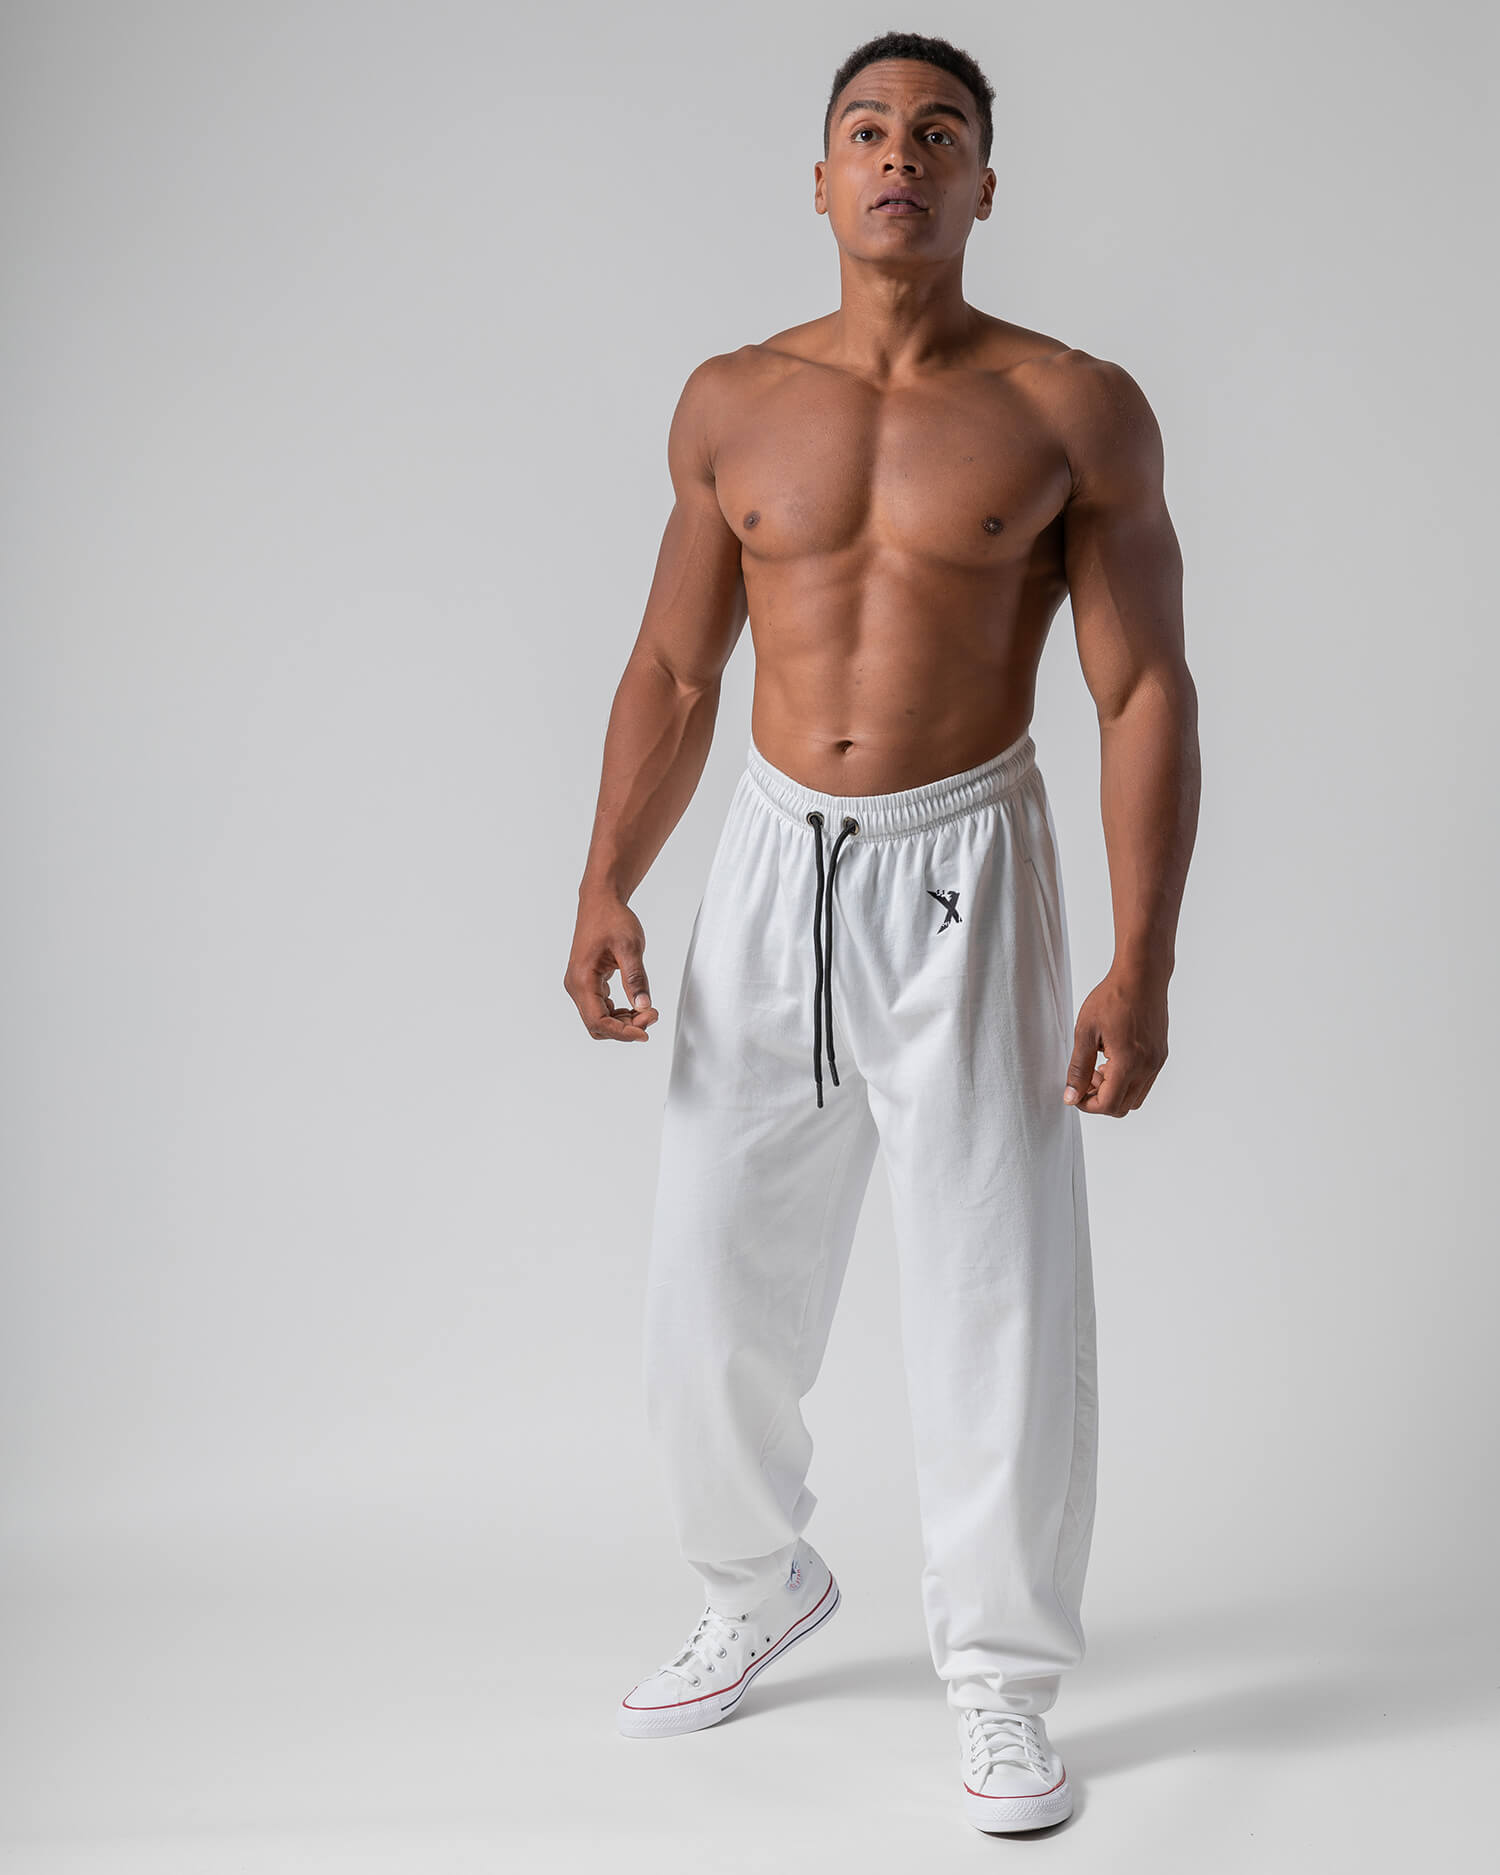 MNX Bodybuilding Classic Pants, white